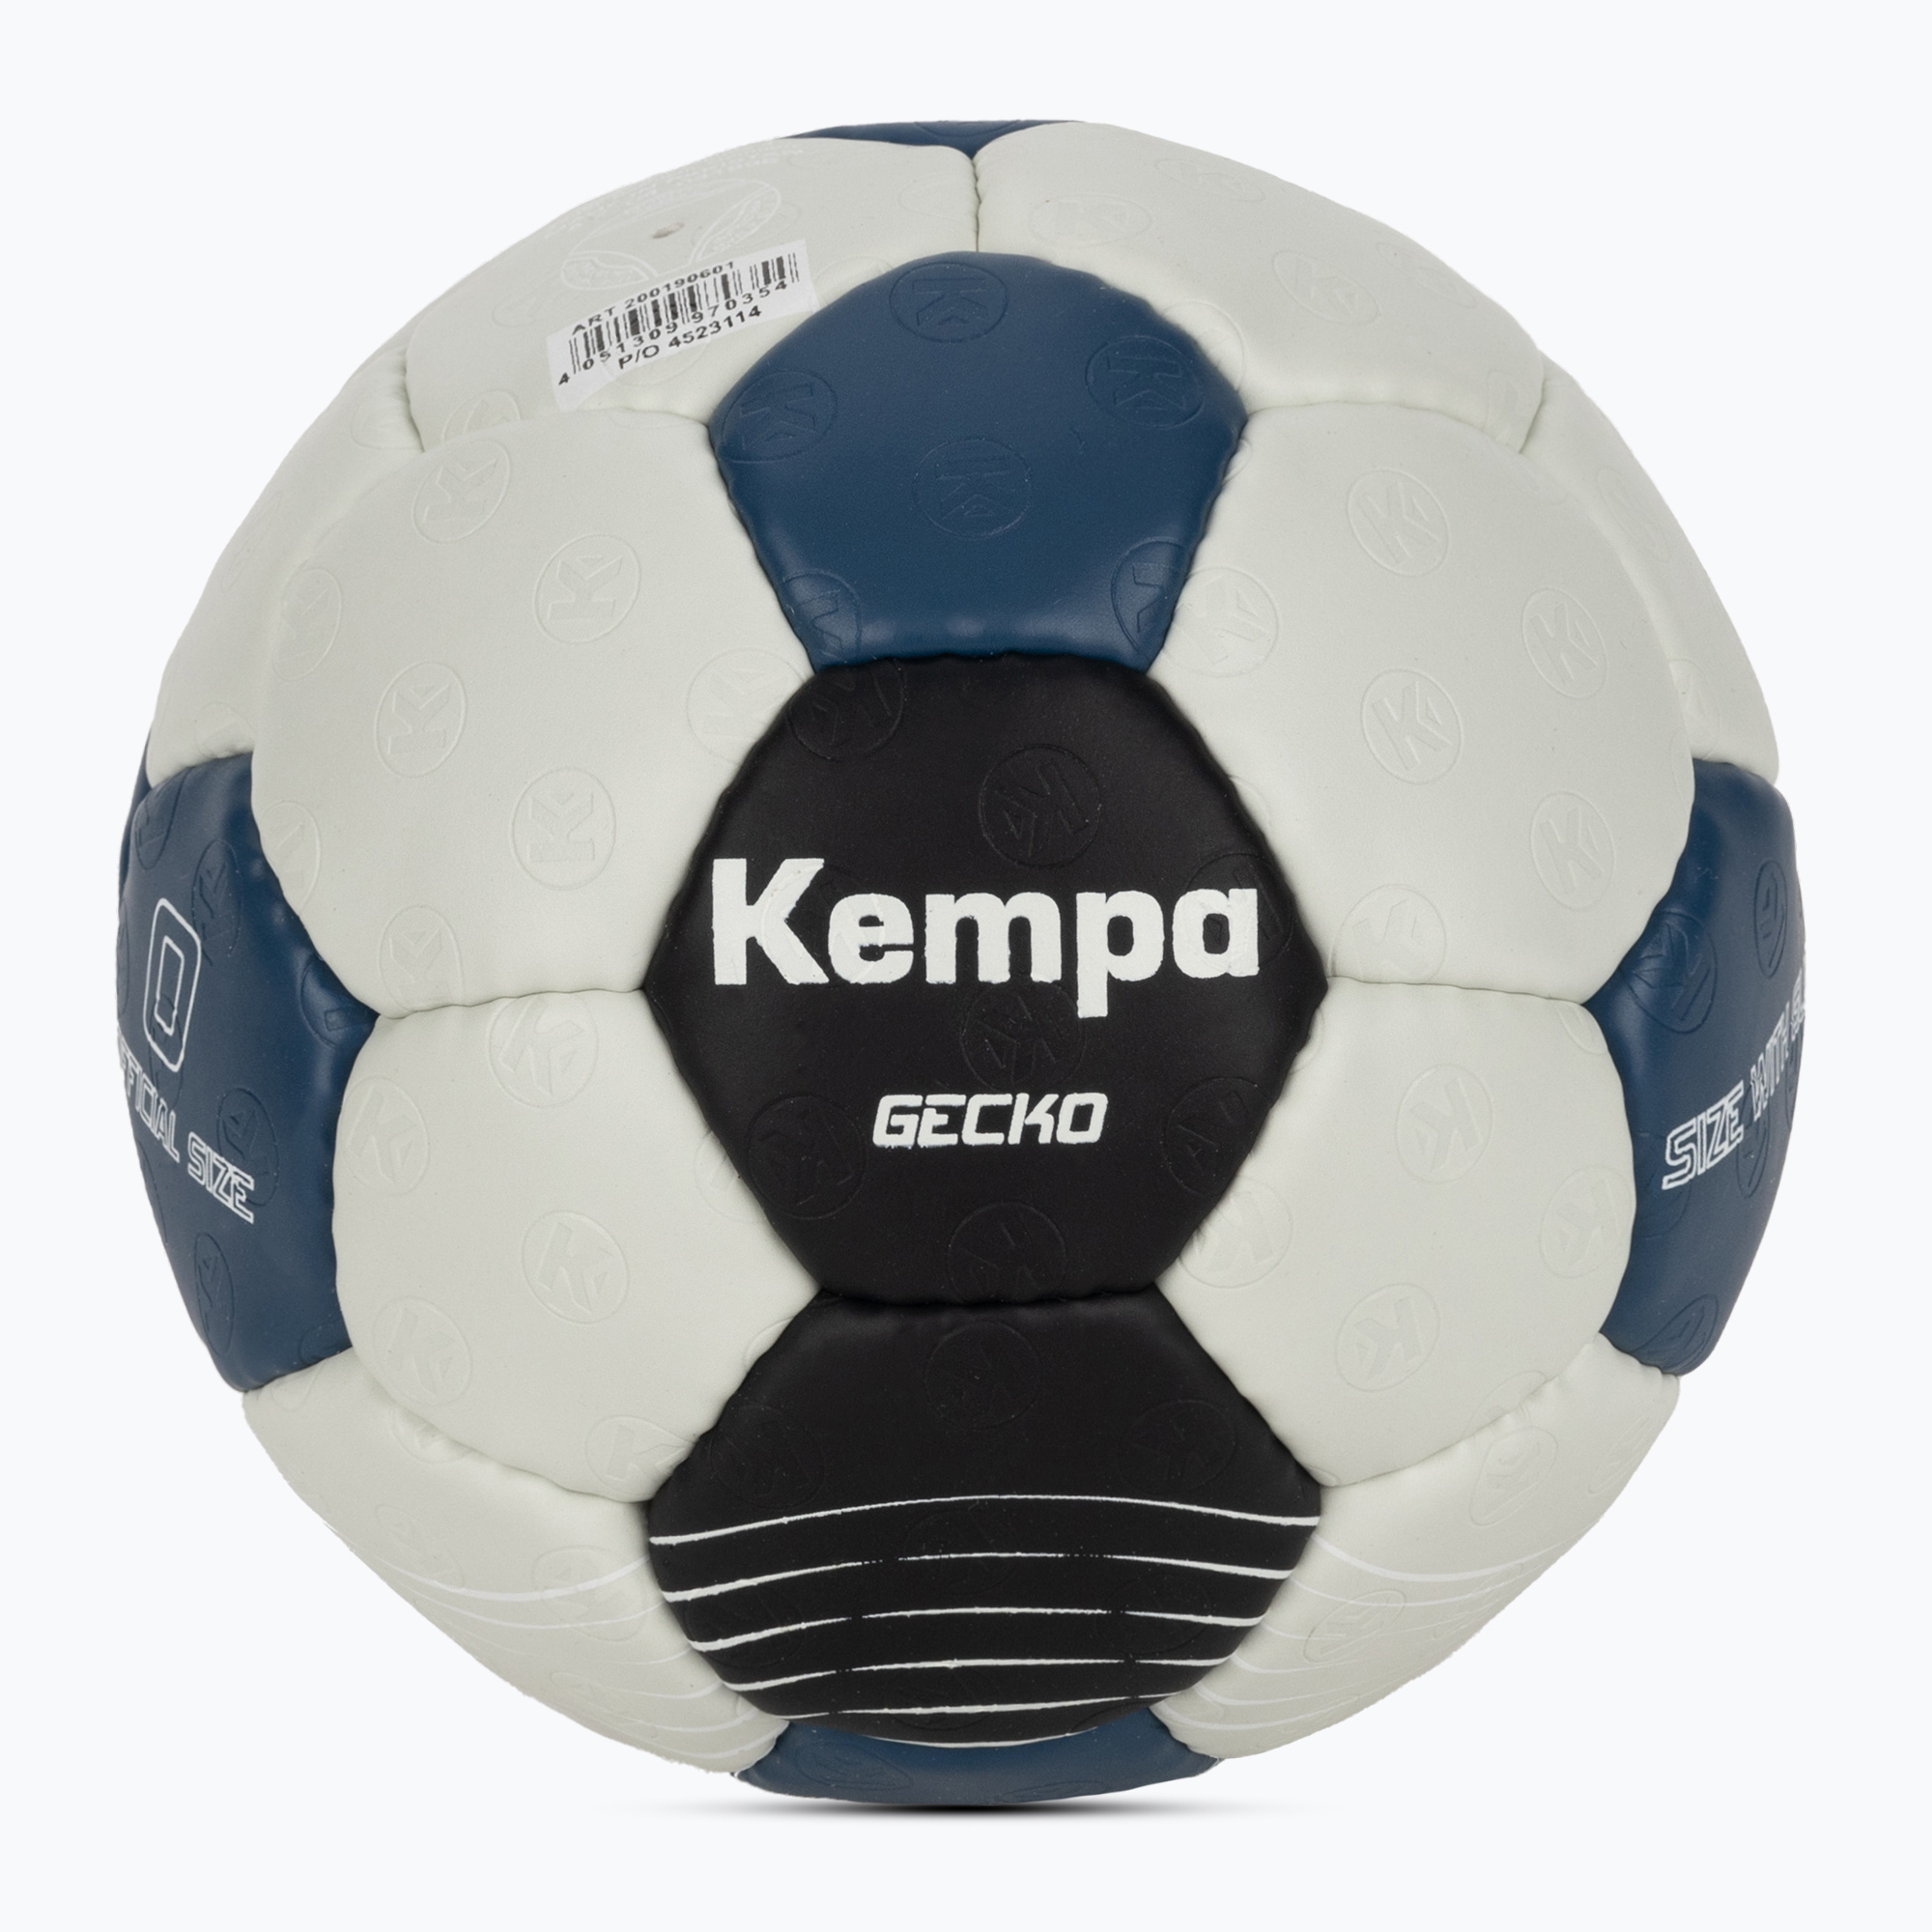 Kempa Gecko handbal 200190601/0 mărimea 0